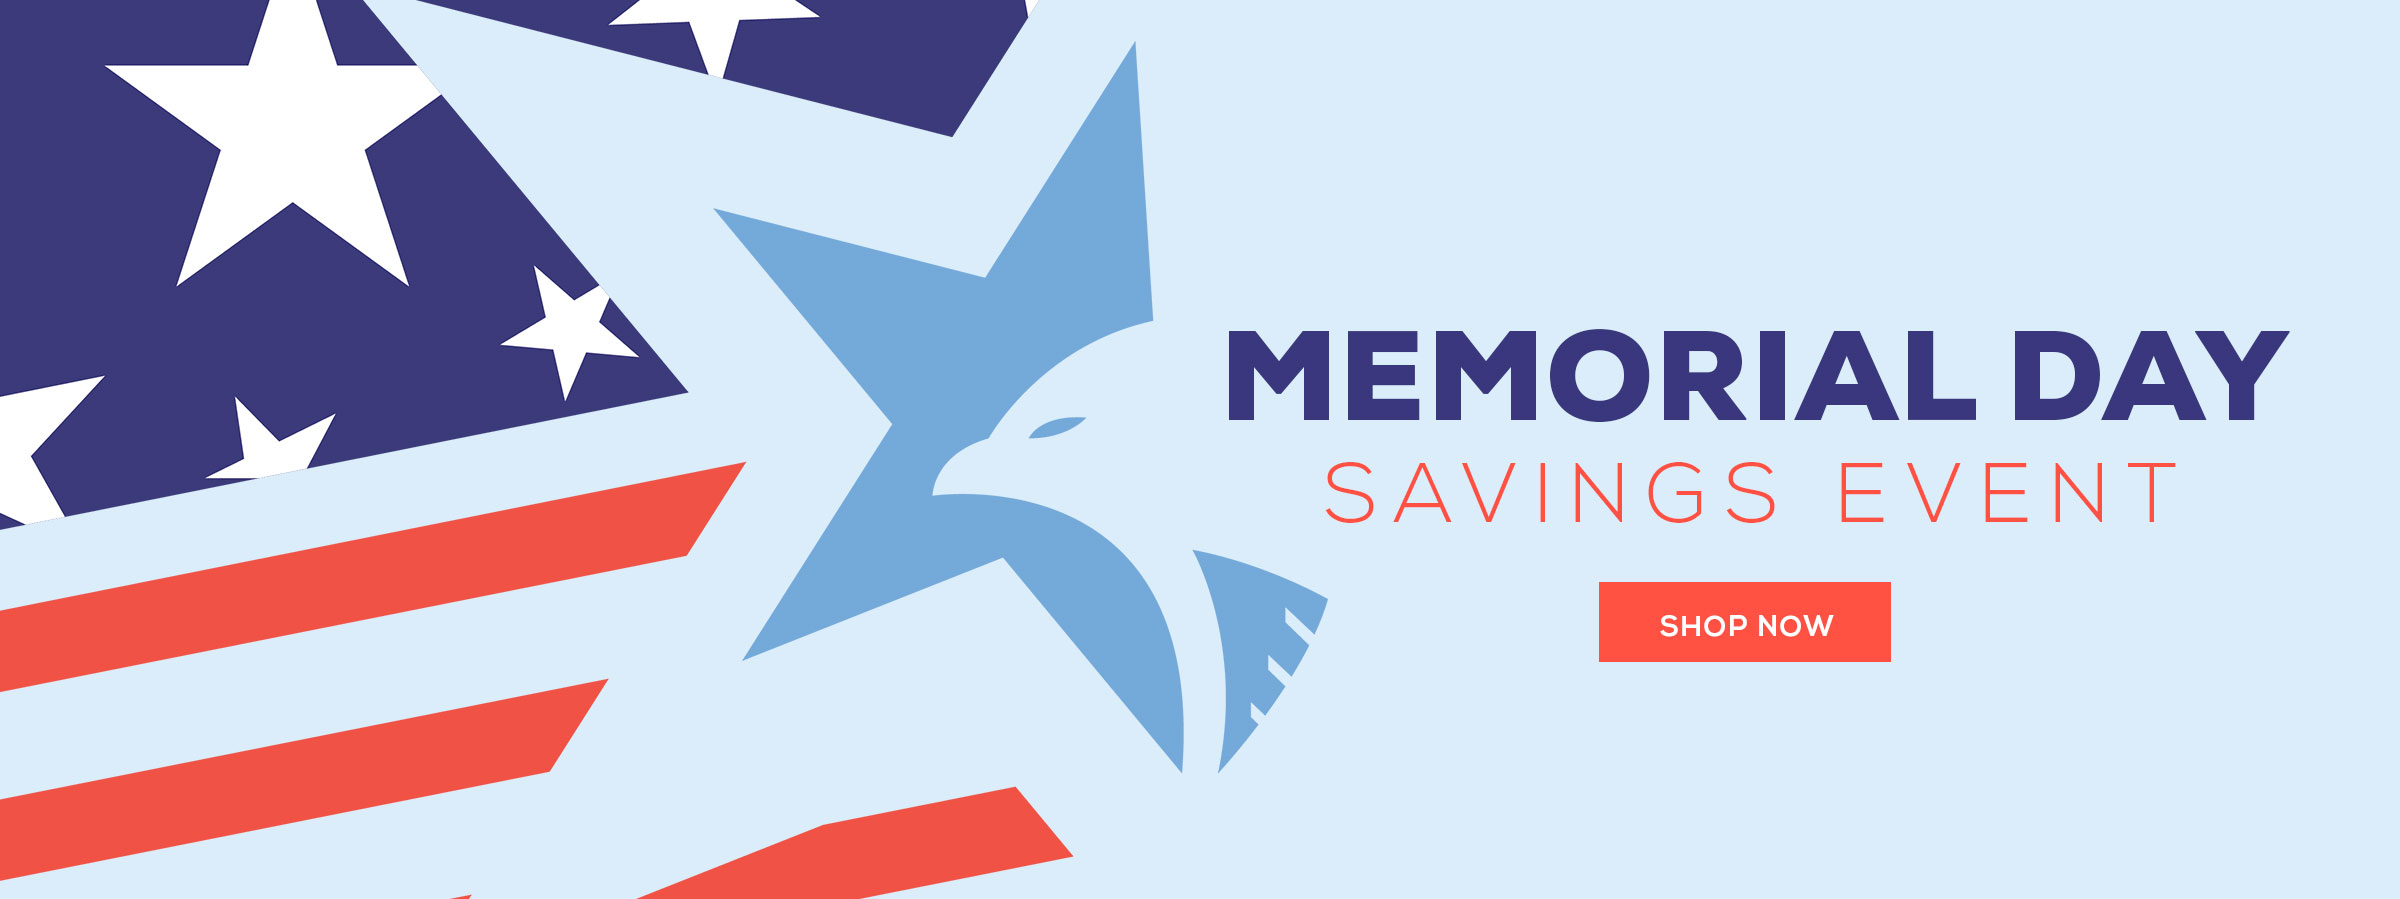 Memorial Day savings event shop now